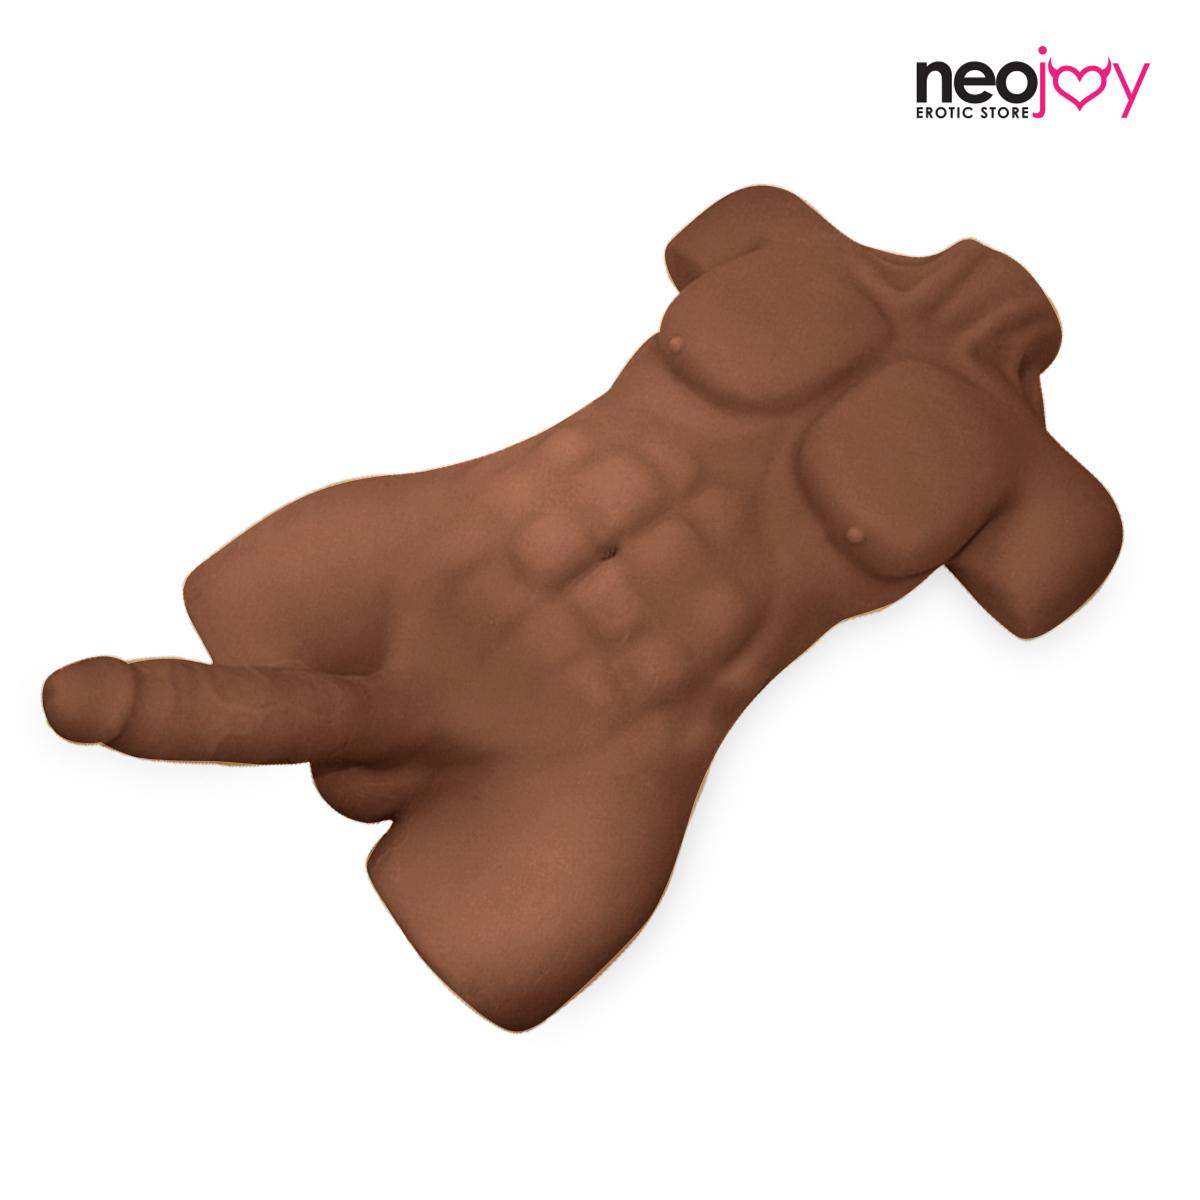 Neojoy - King Fighter Male Sex Doll (Brown) 11.8KG